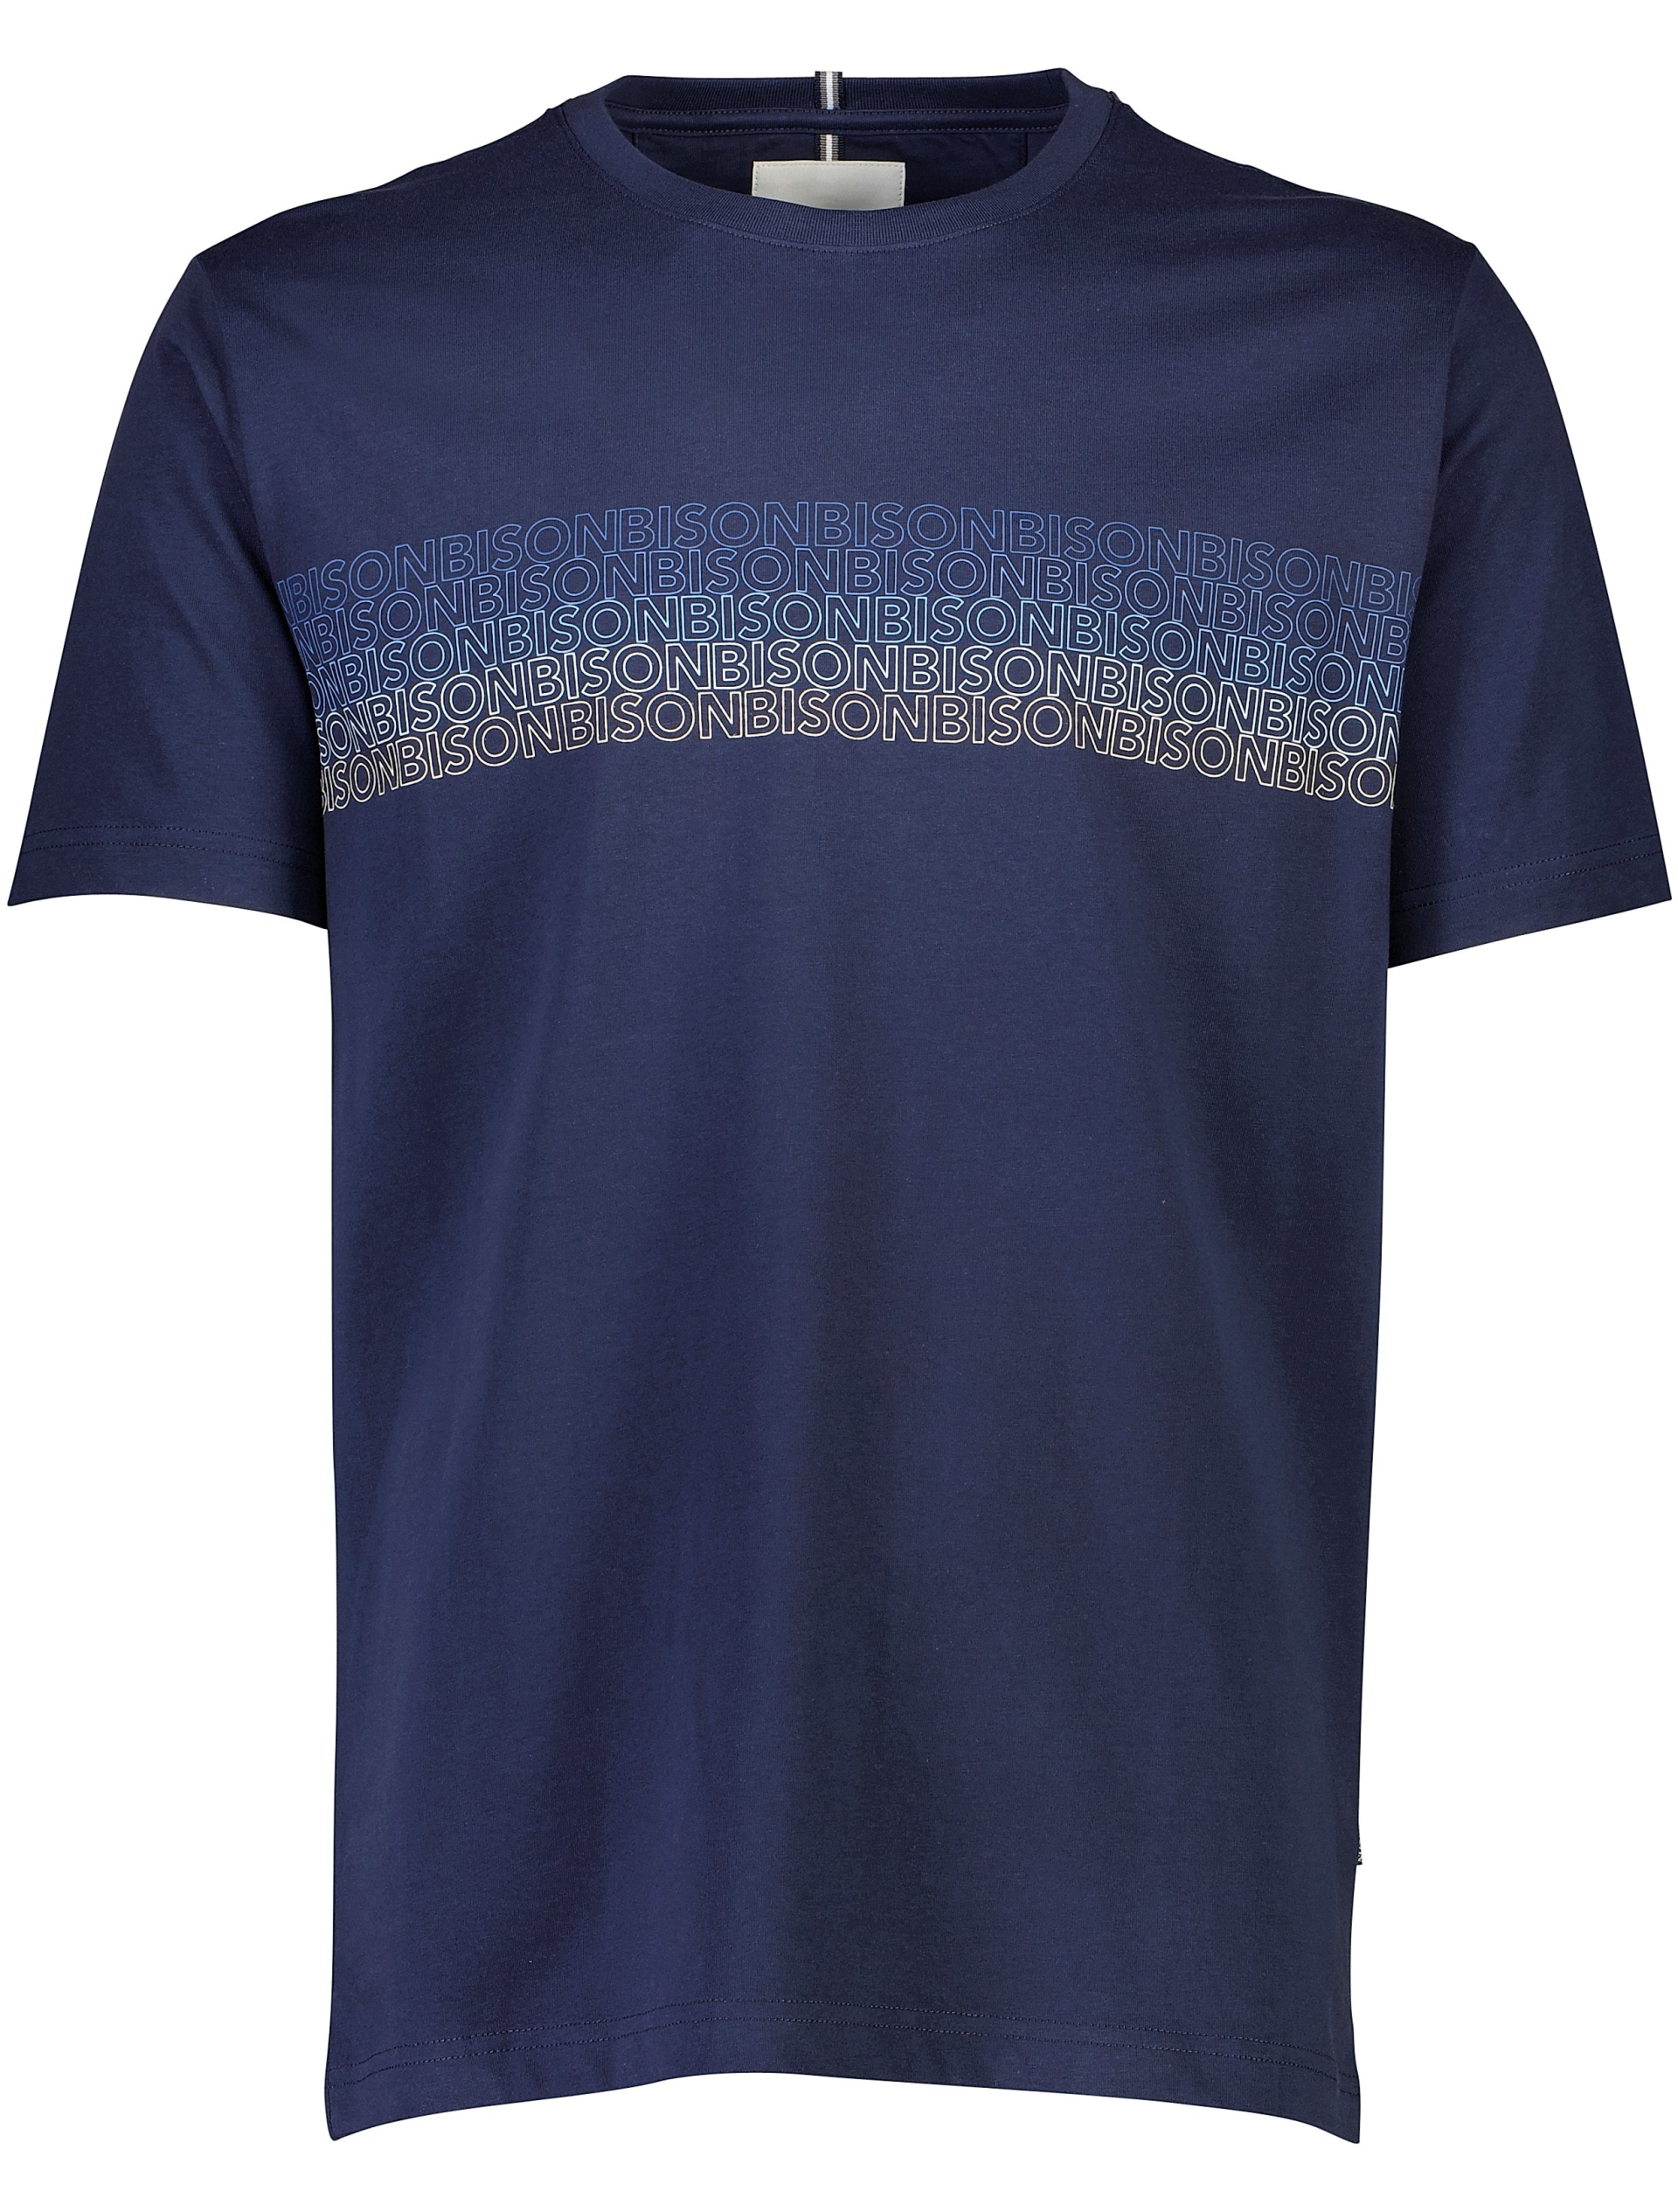 Bison T-shirt blå / navy